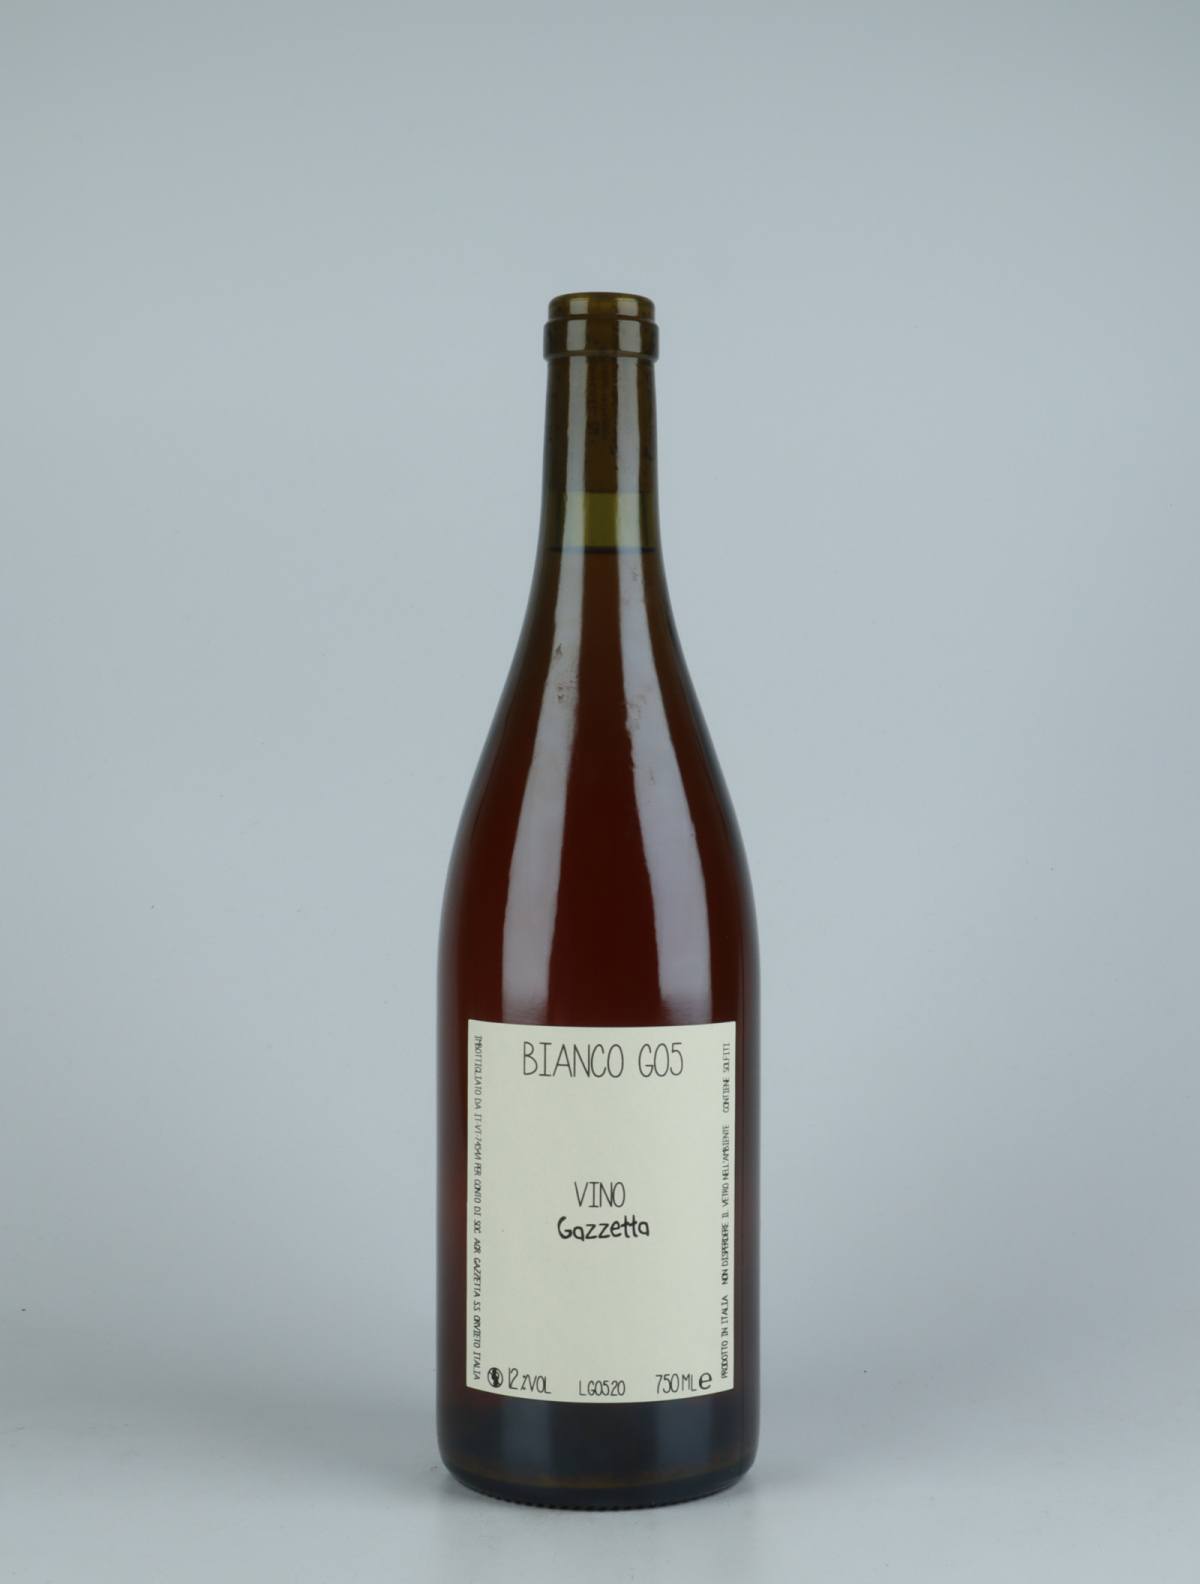 En flaske 2020 Vino Bianco G05 Orange vin fra Gazzetta, Lazio i Italien